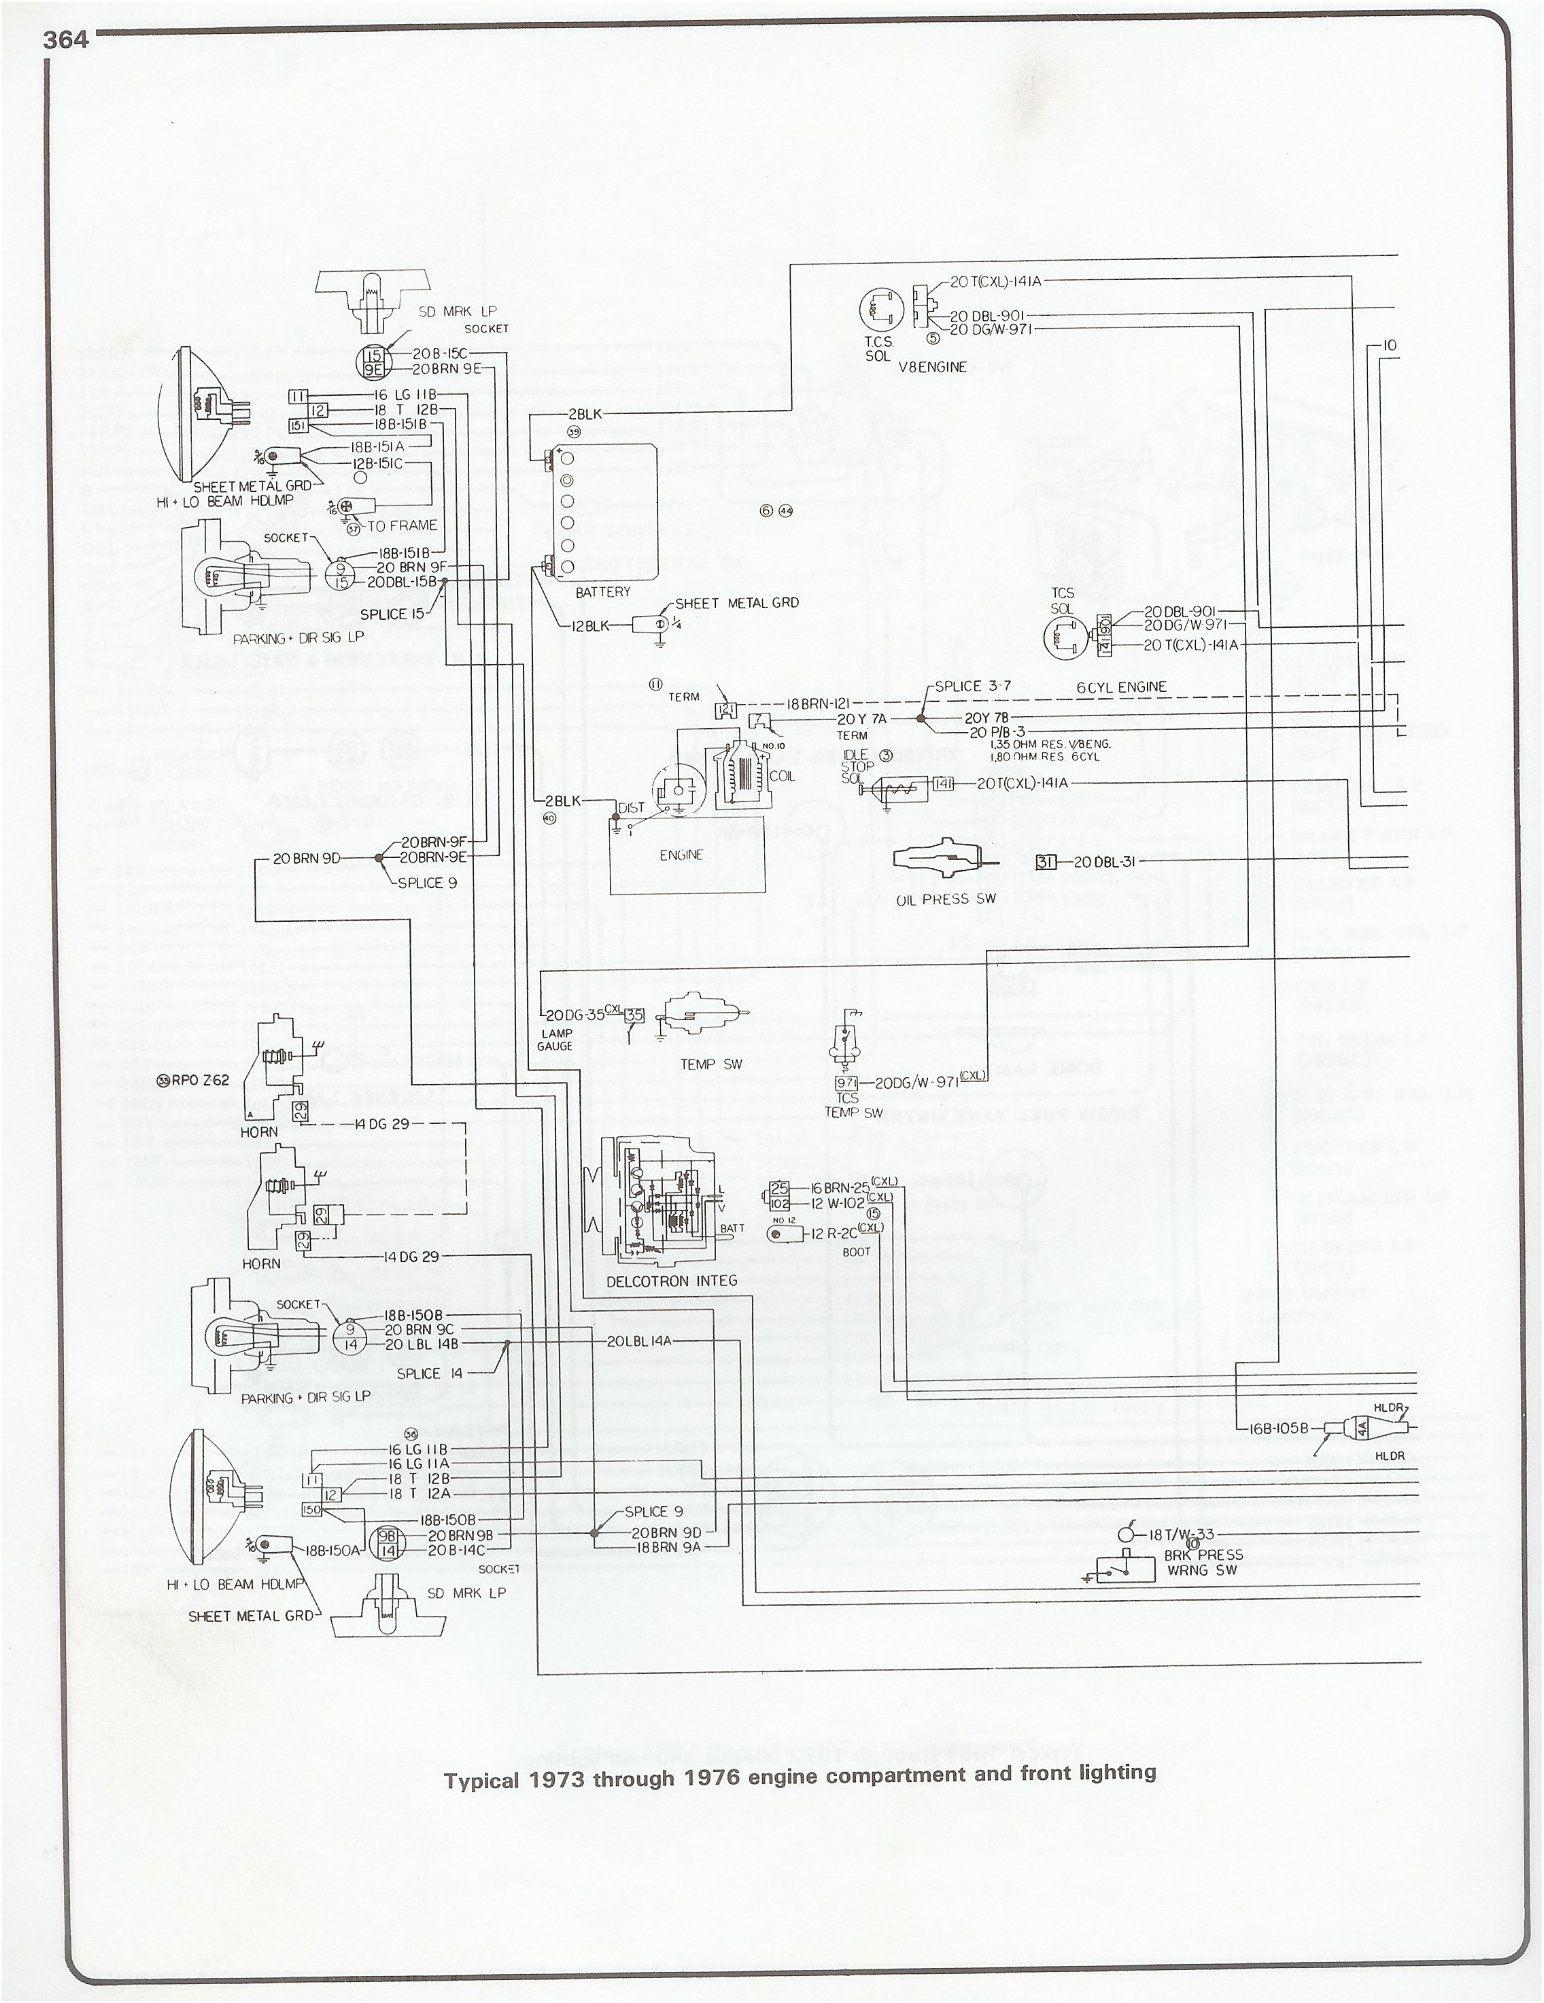 wiring diagram 1973 1976 chevy pickup chevy wiring diagram 73 chevy wiring diagram 73 chevy wiring diagram